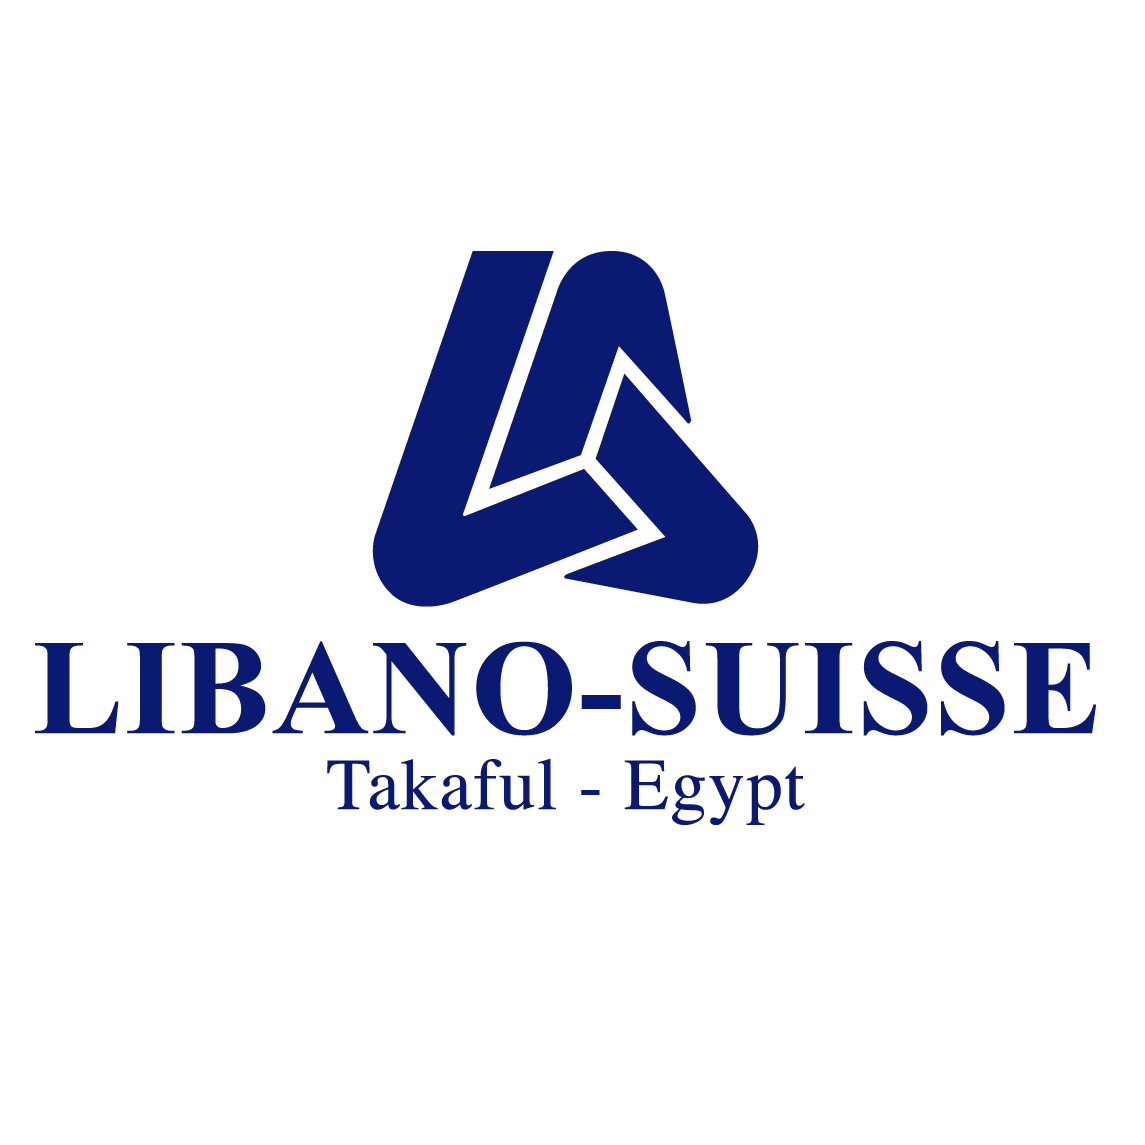 Libano Suisse insurance company provides medical insurance through advice insurance brokerage